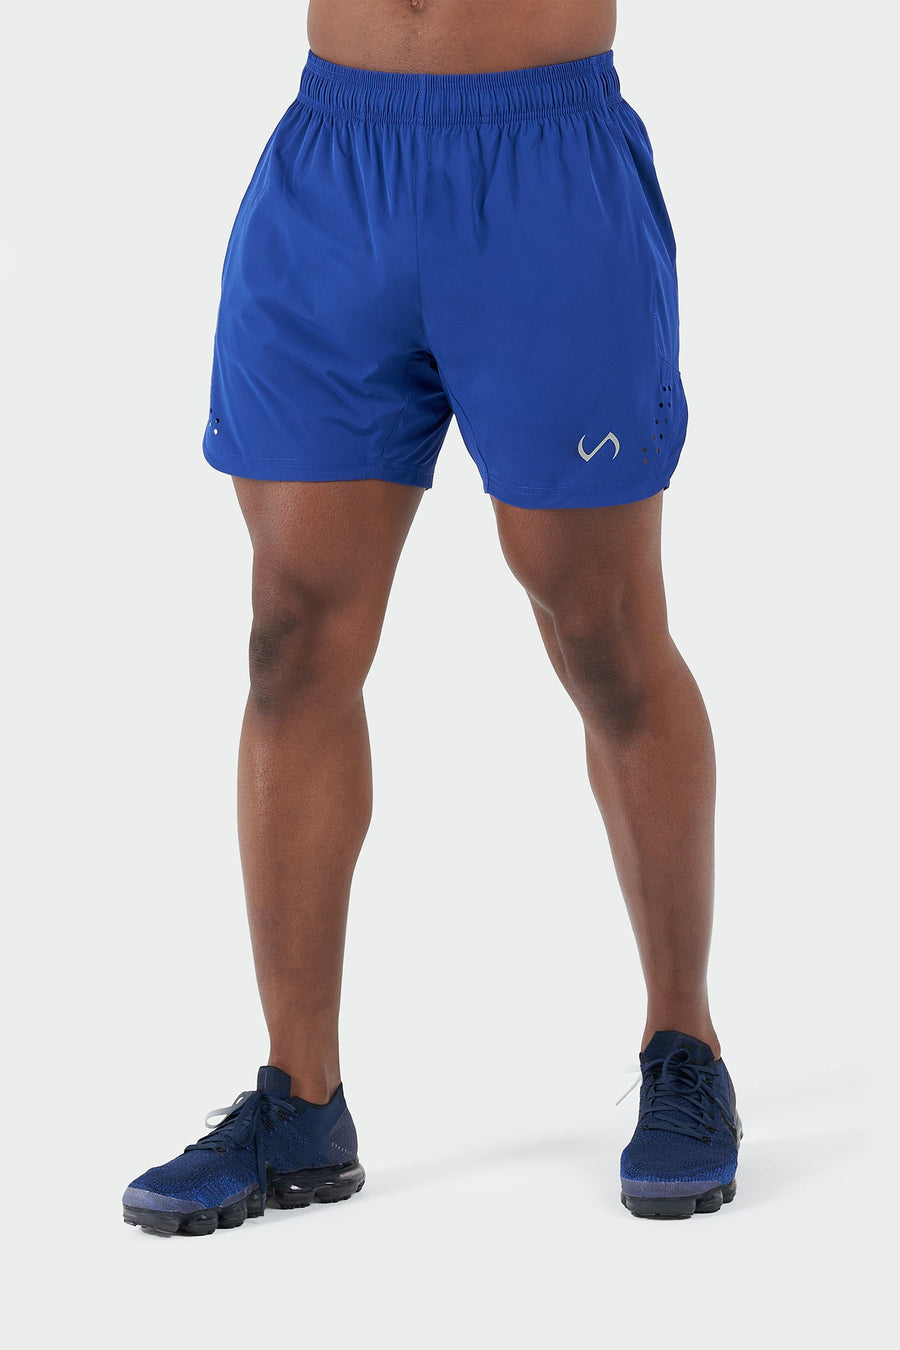 TLF Element 5” Shorts - Men’s 5 Inch inseam Shorts – Midnight Blue - 2